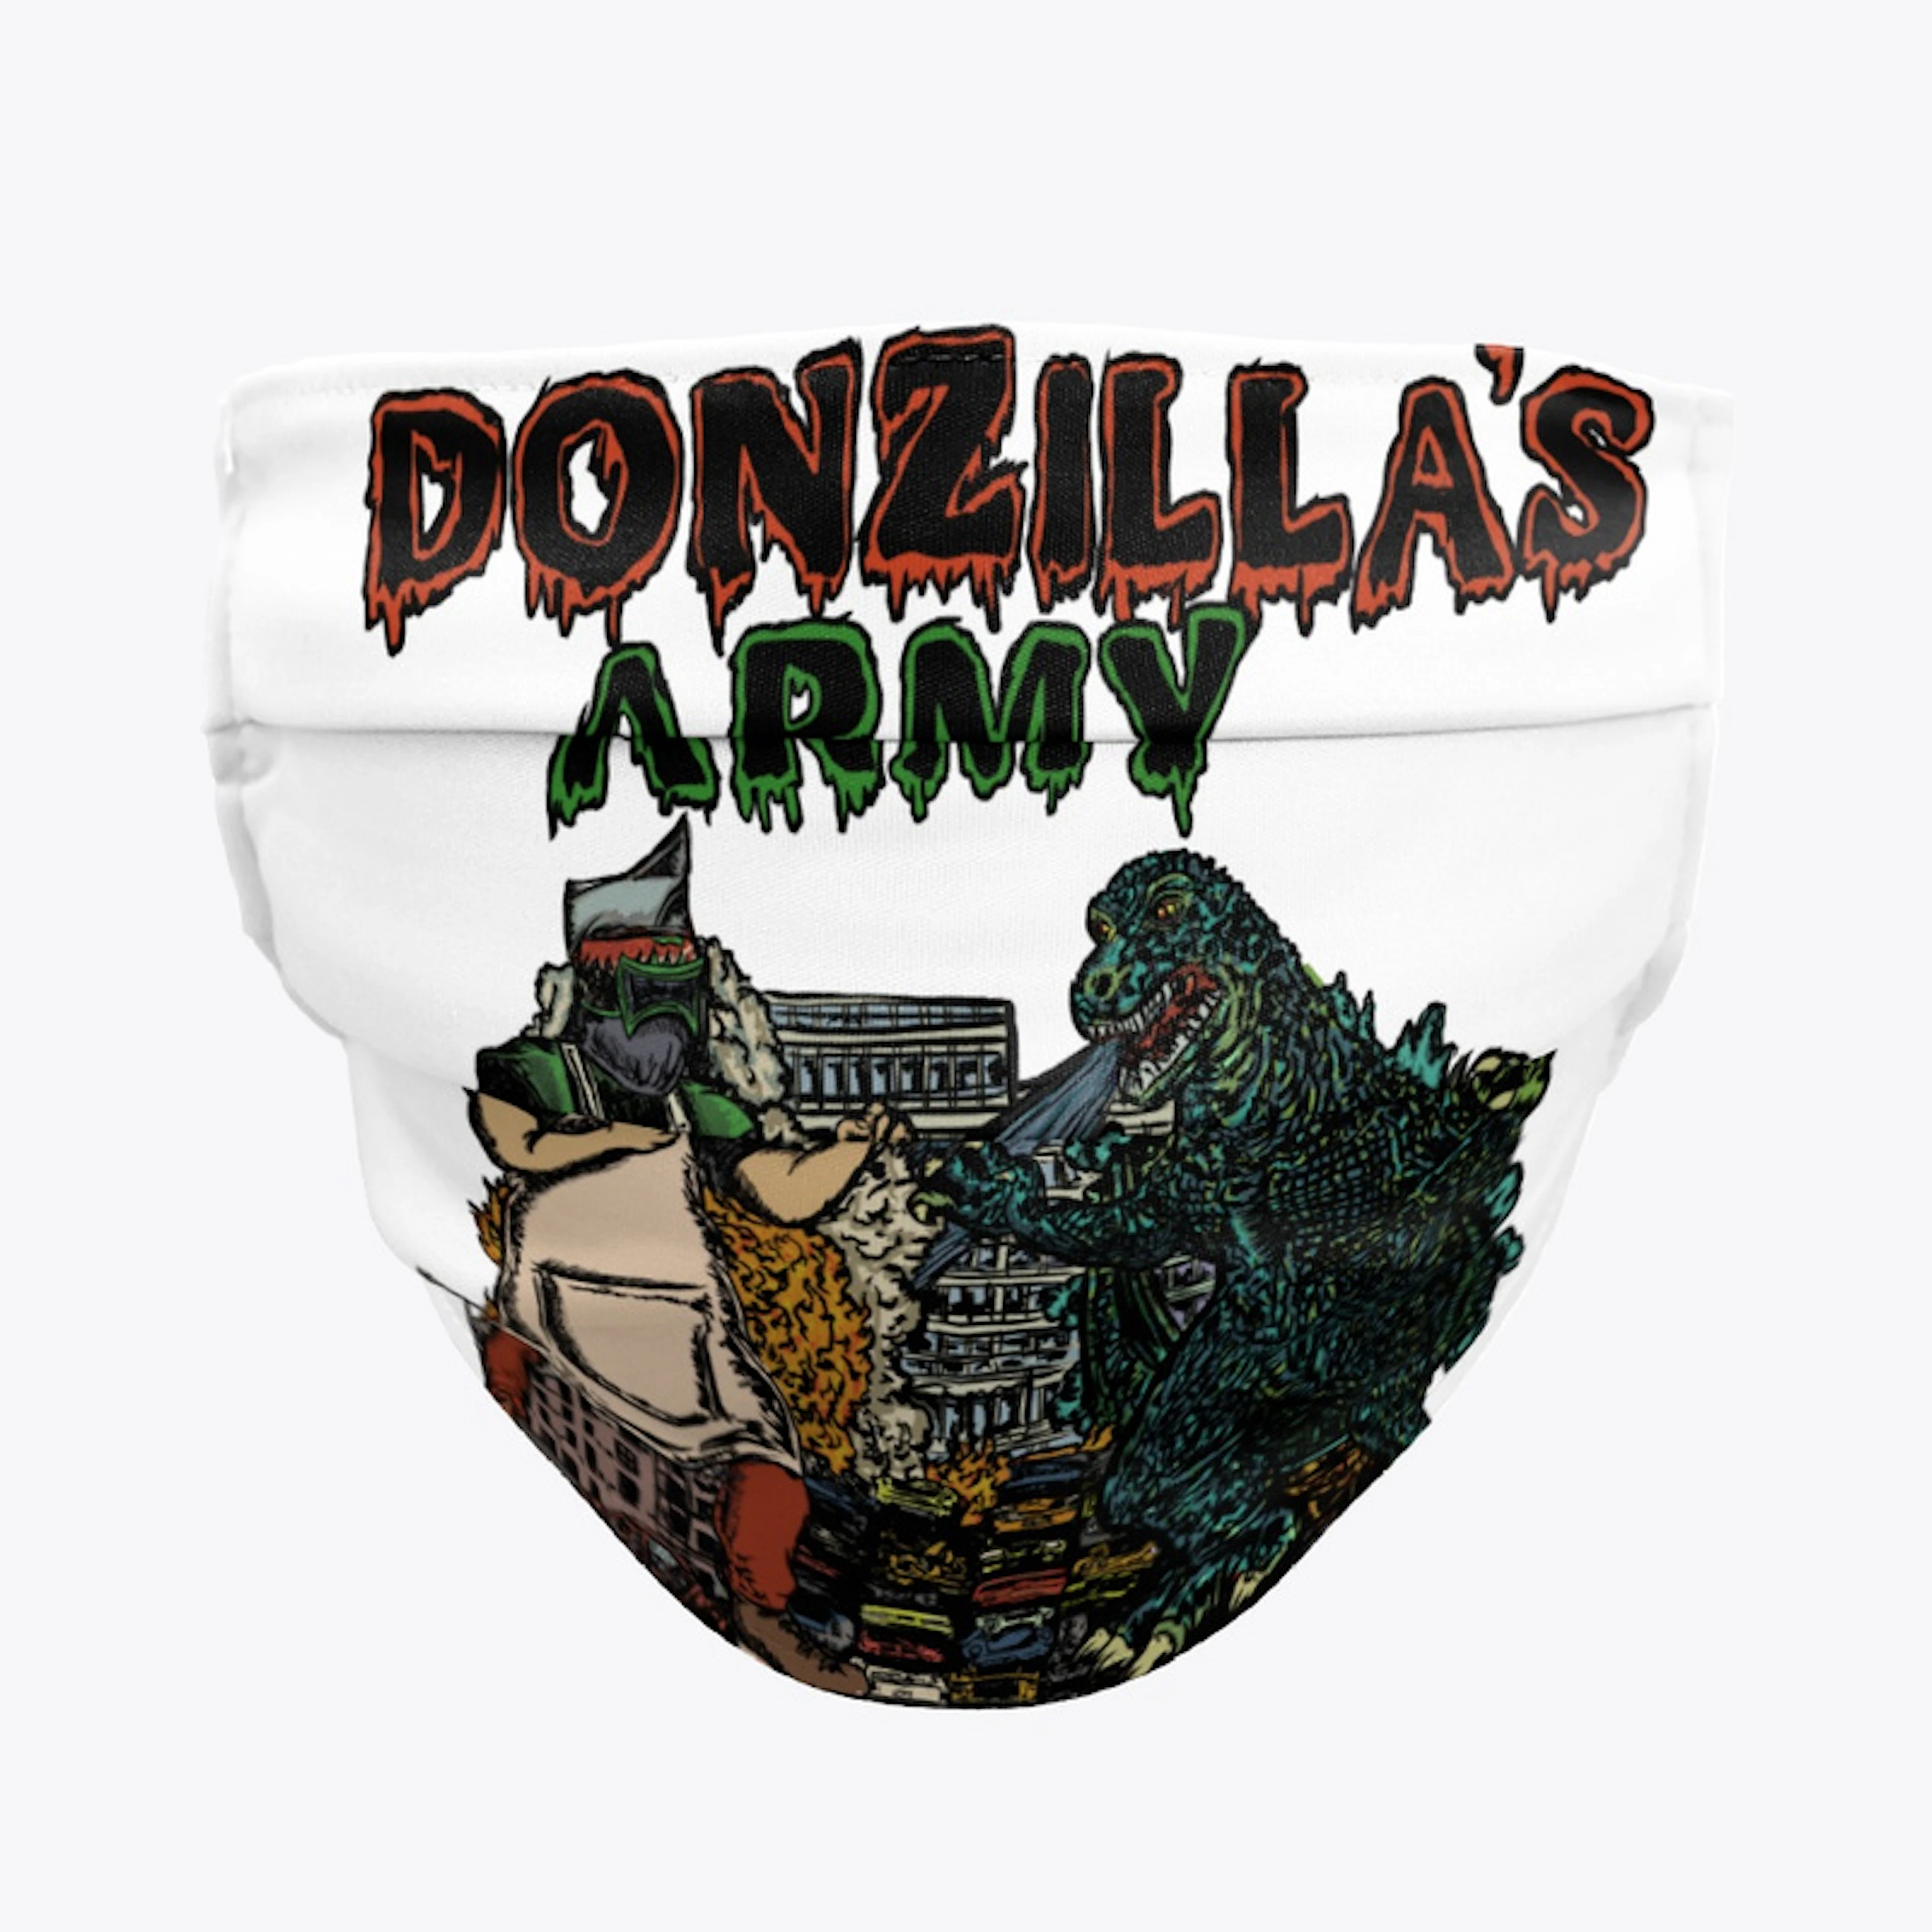 Donzilla's Army